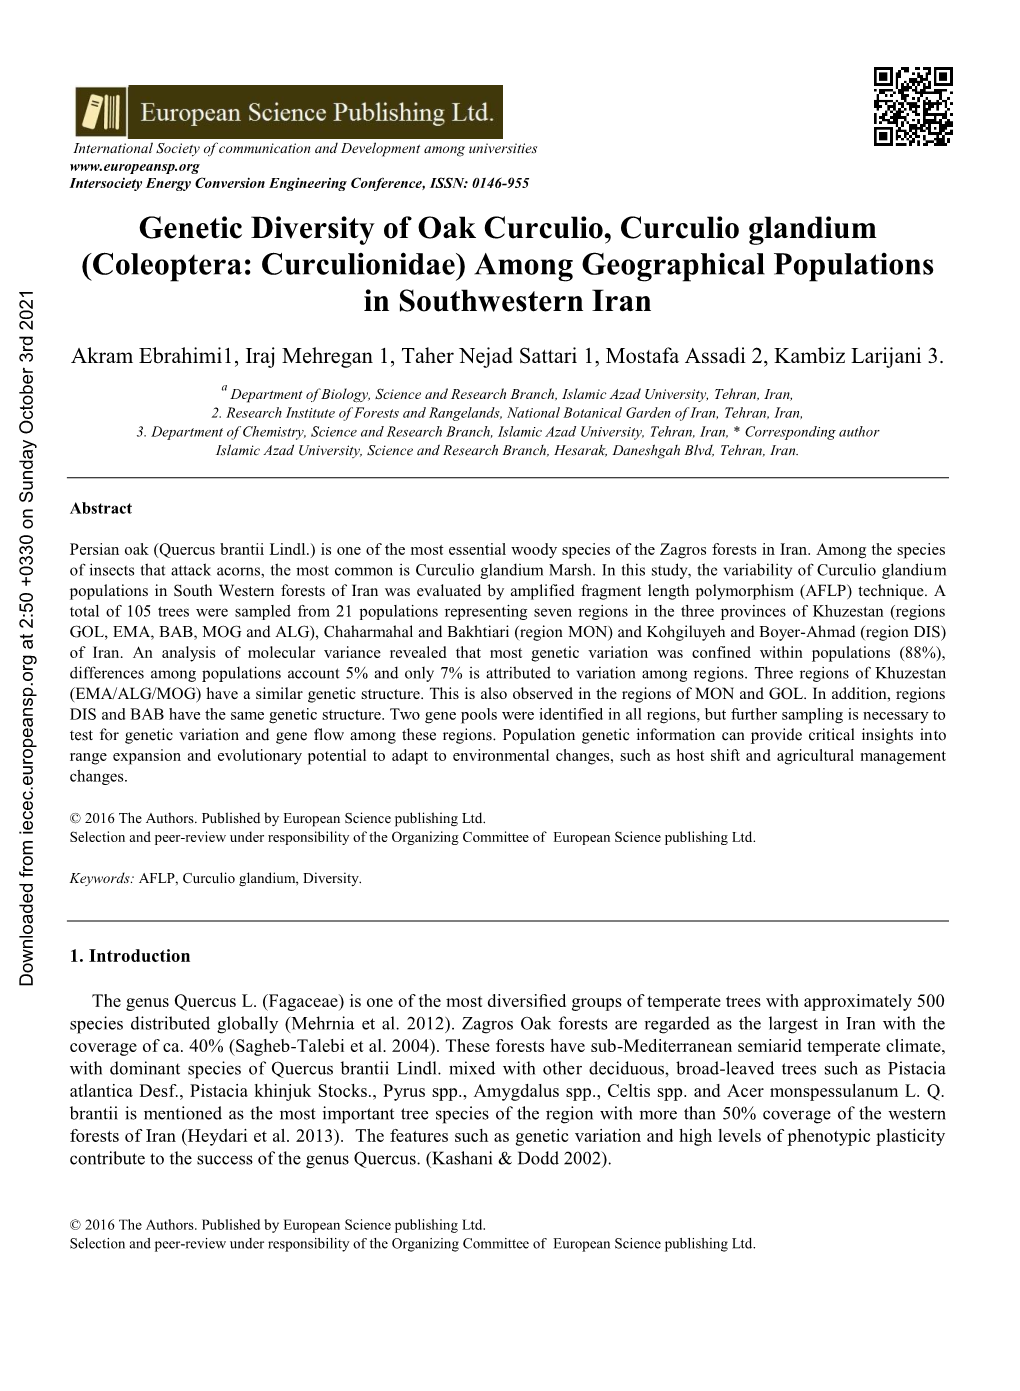 Genetic Diversity of Oak Curculio, Curculio Glandium (Coleoptera: Curculionidae) Among Geographical Populations in Southwestern Iran